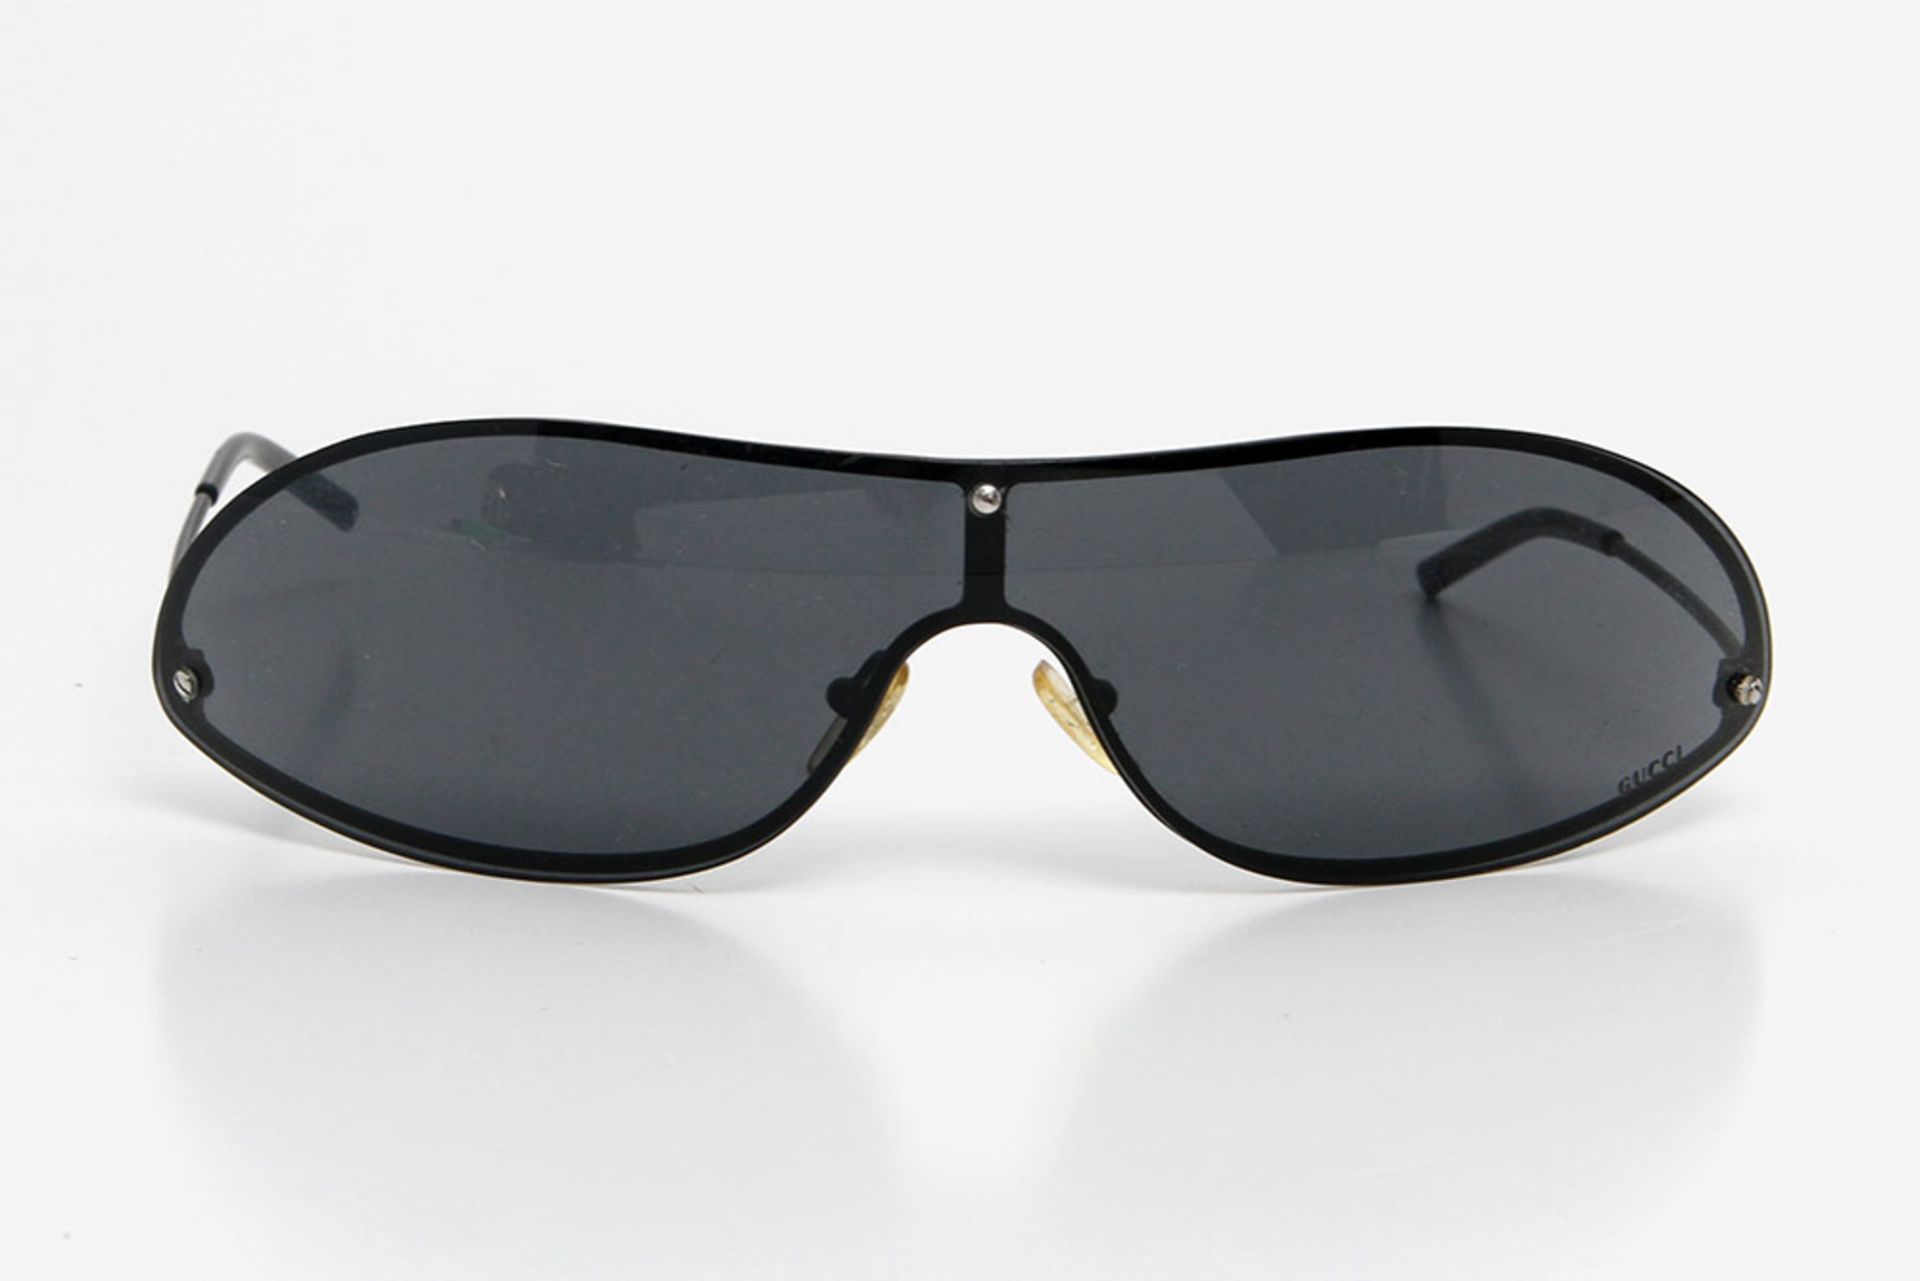 GUCCI modische Sonnenbrille. NP. ca. 220,-. Scheibenbille im futuristischem Design mit schmaler